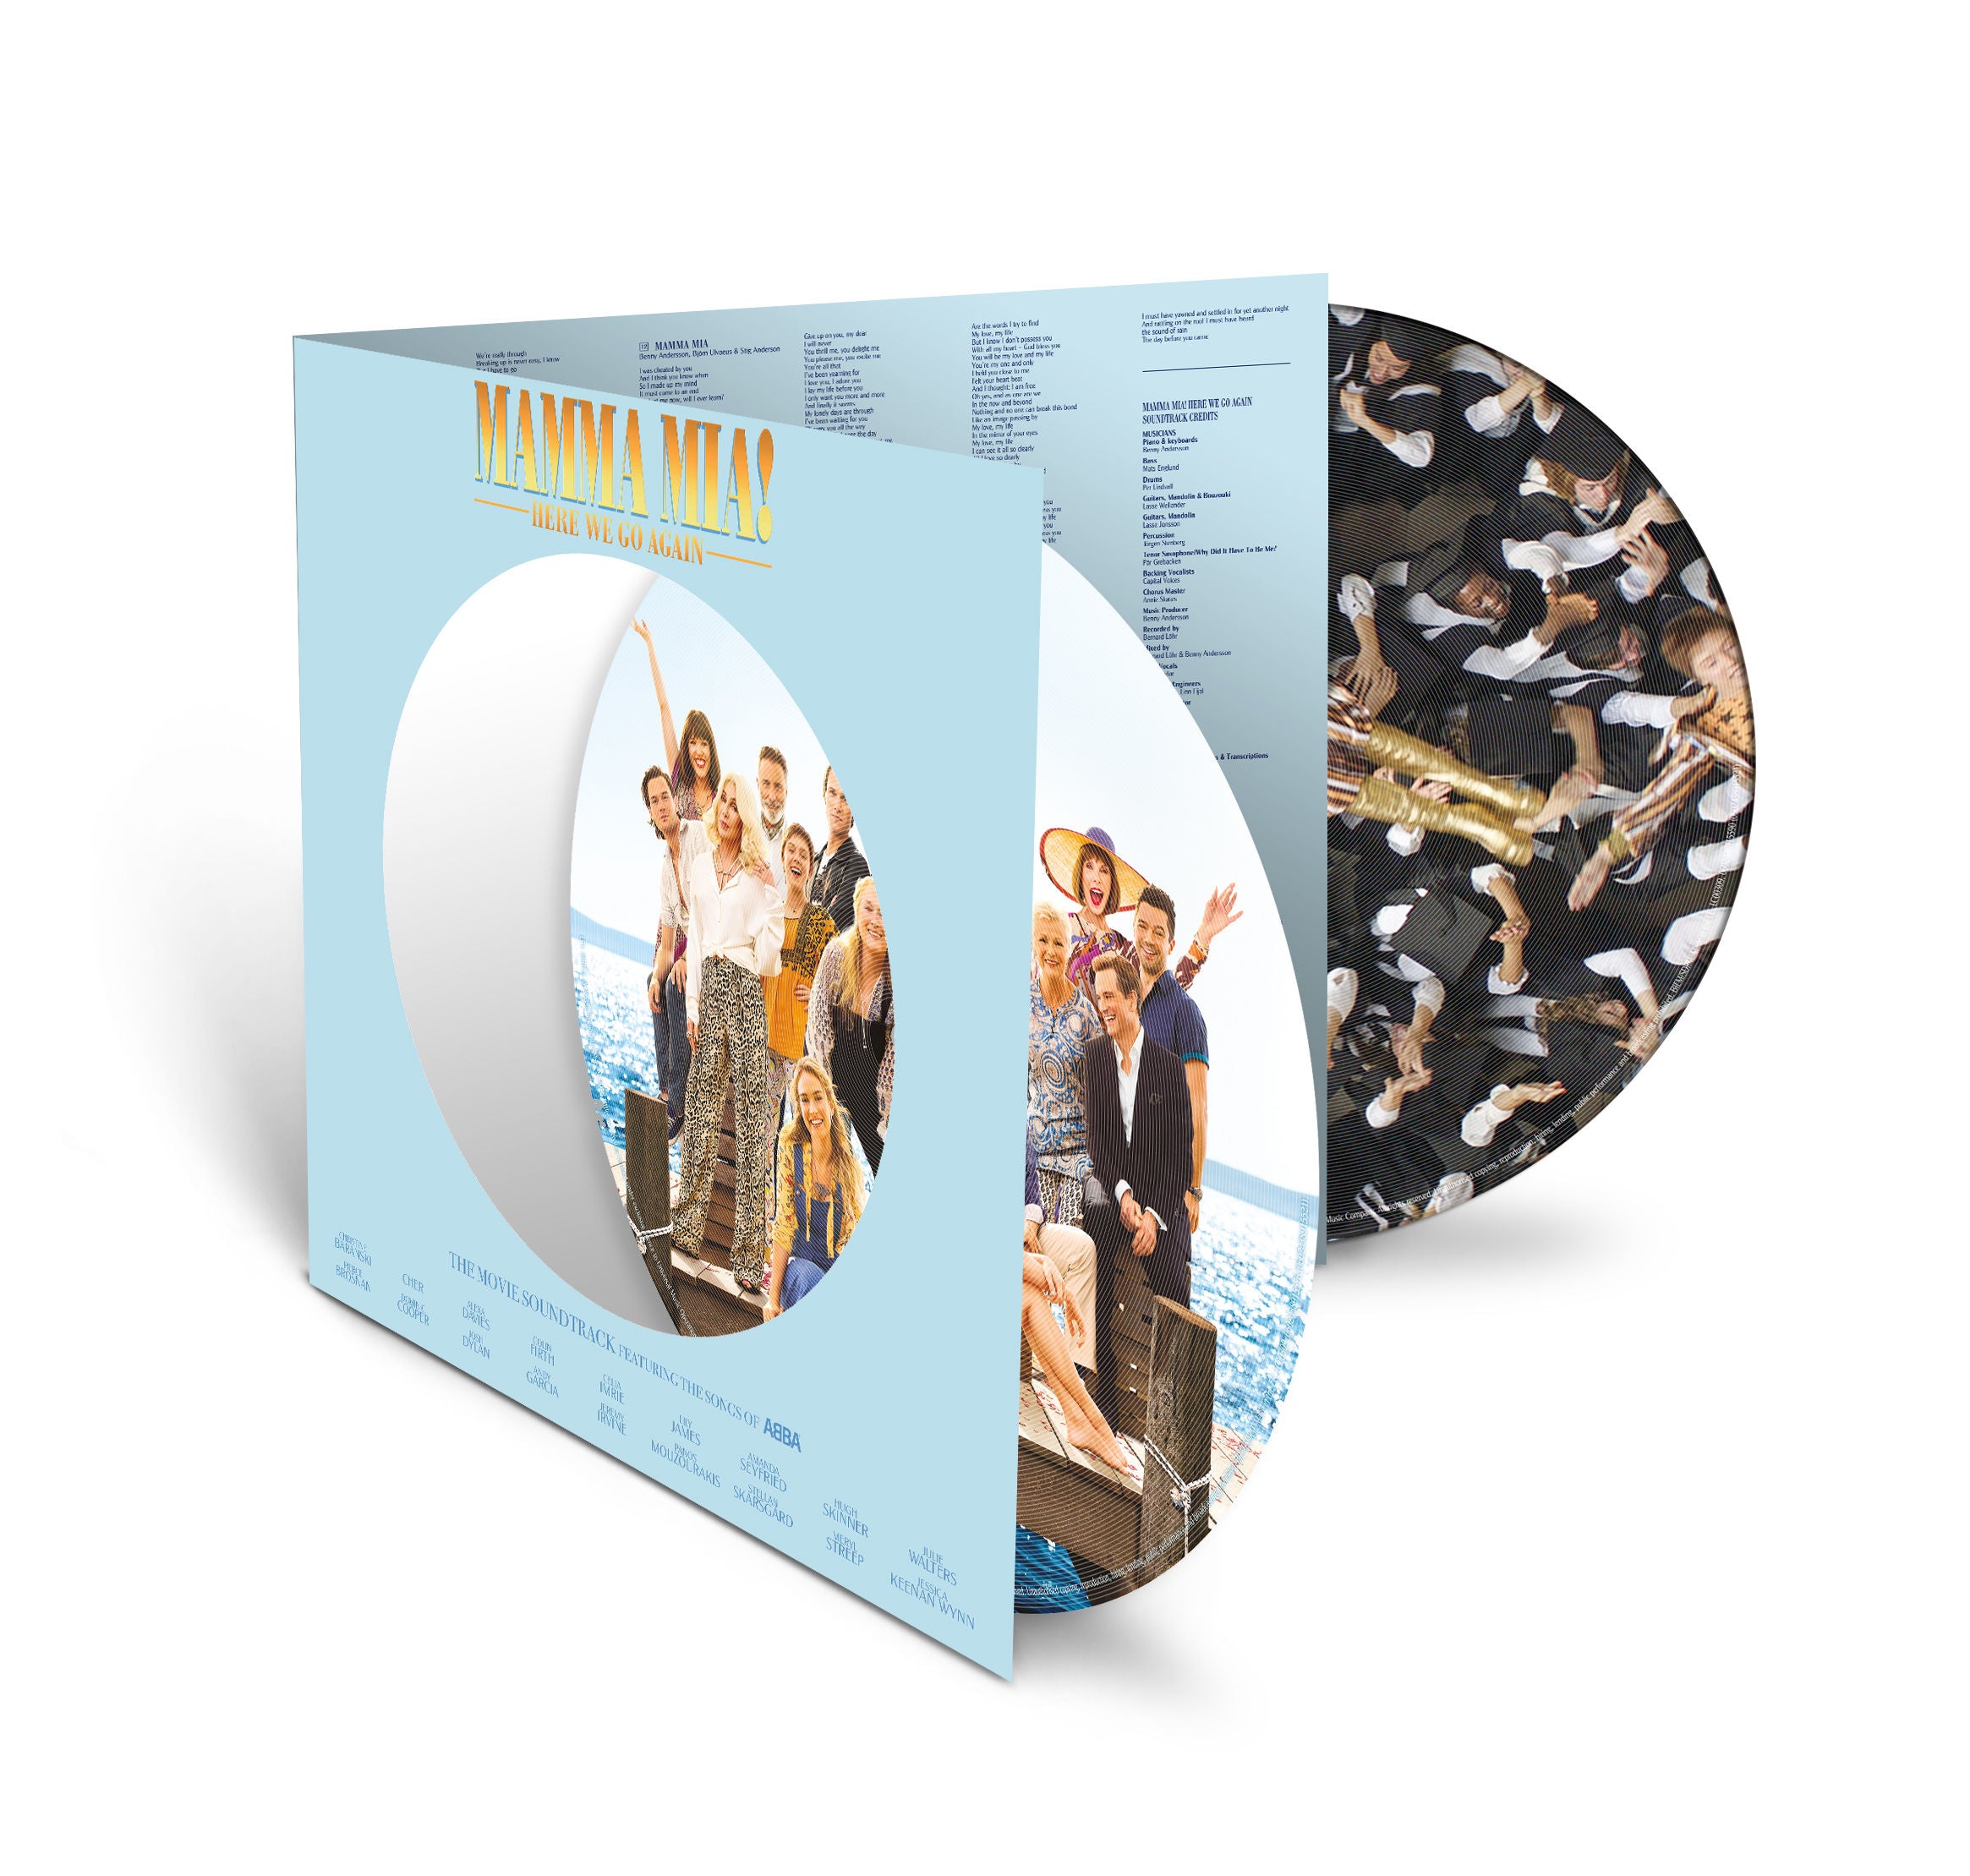 Cast of Mamma Mia! The Movie - Mamma Mia! Here We Go Again (OST): Limited Vinyl Picture Disc 2LP